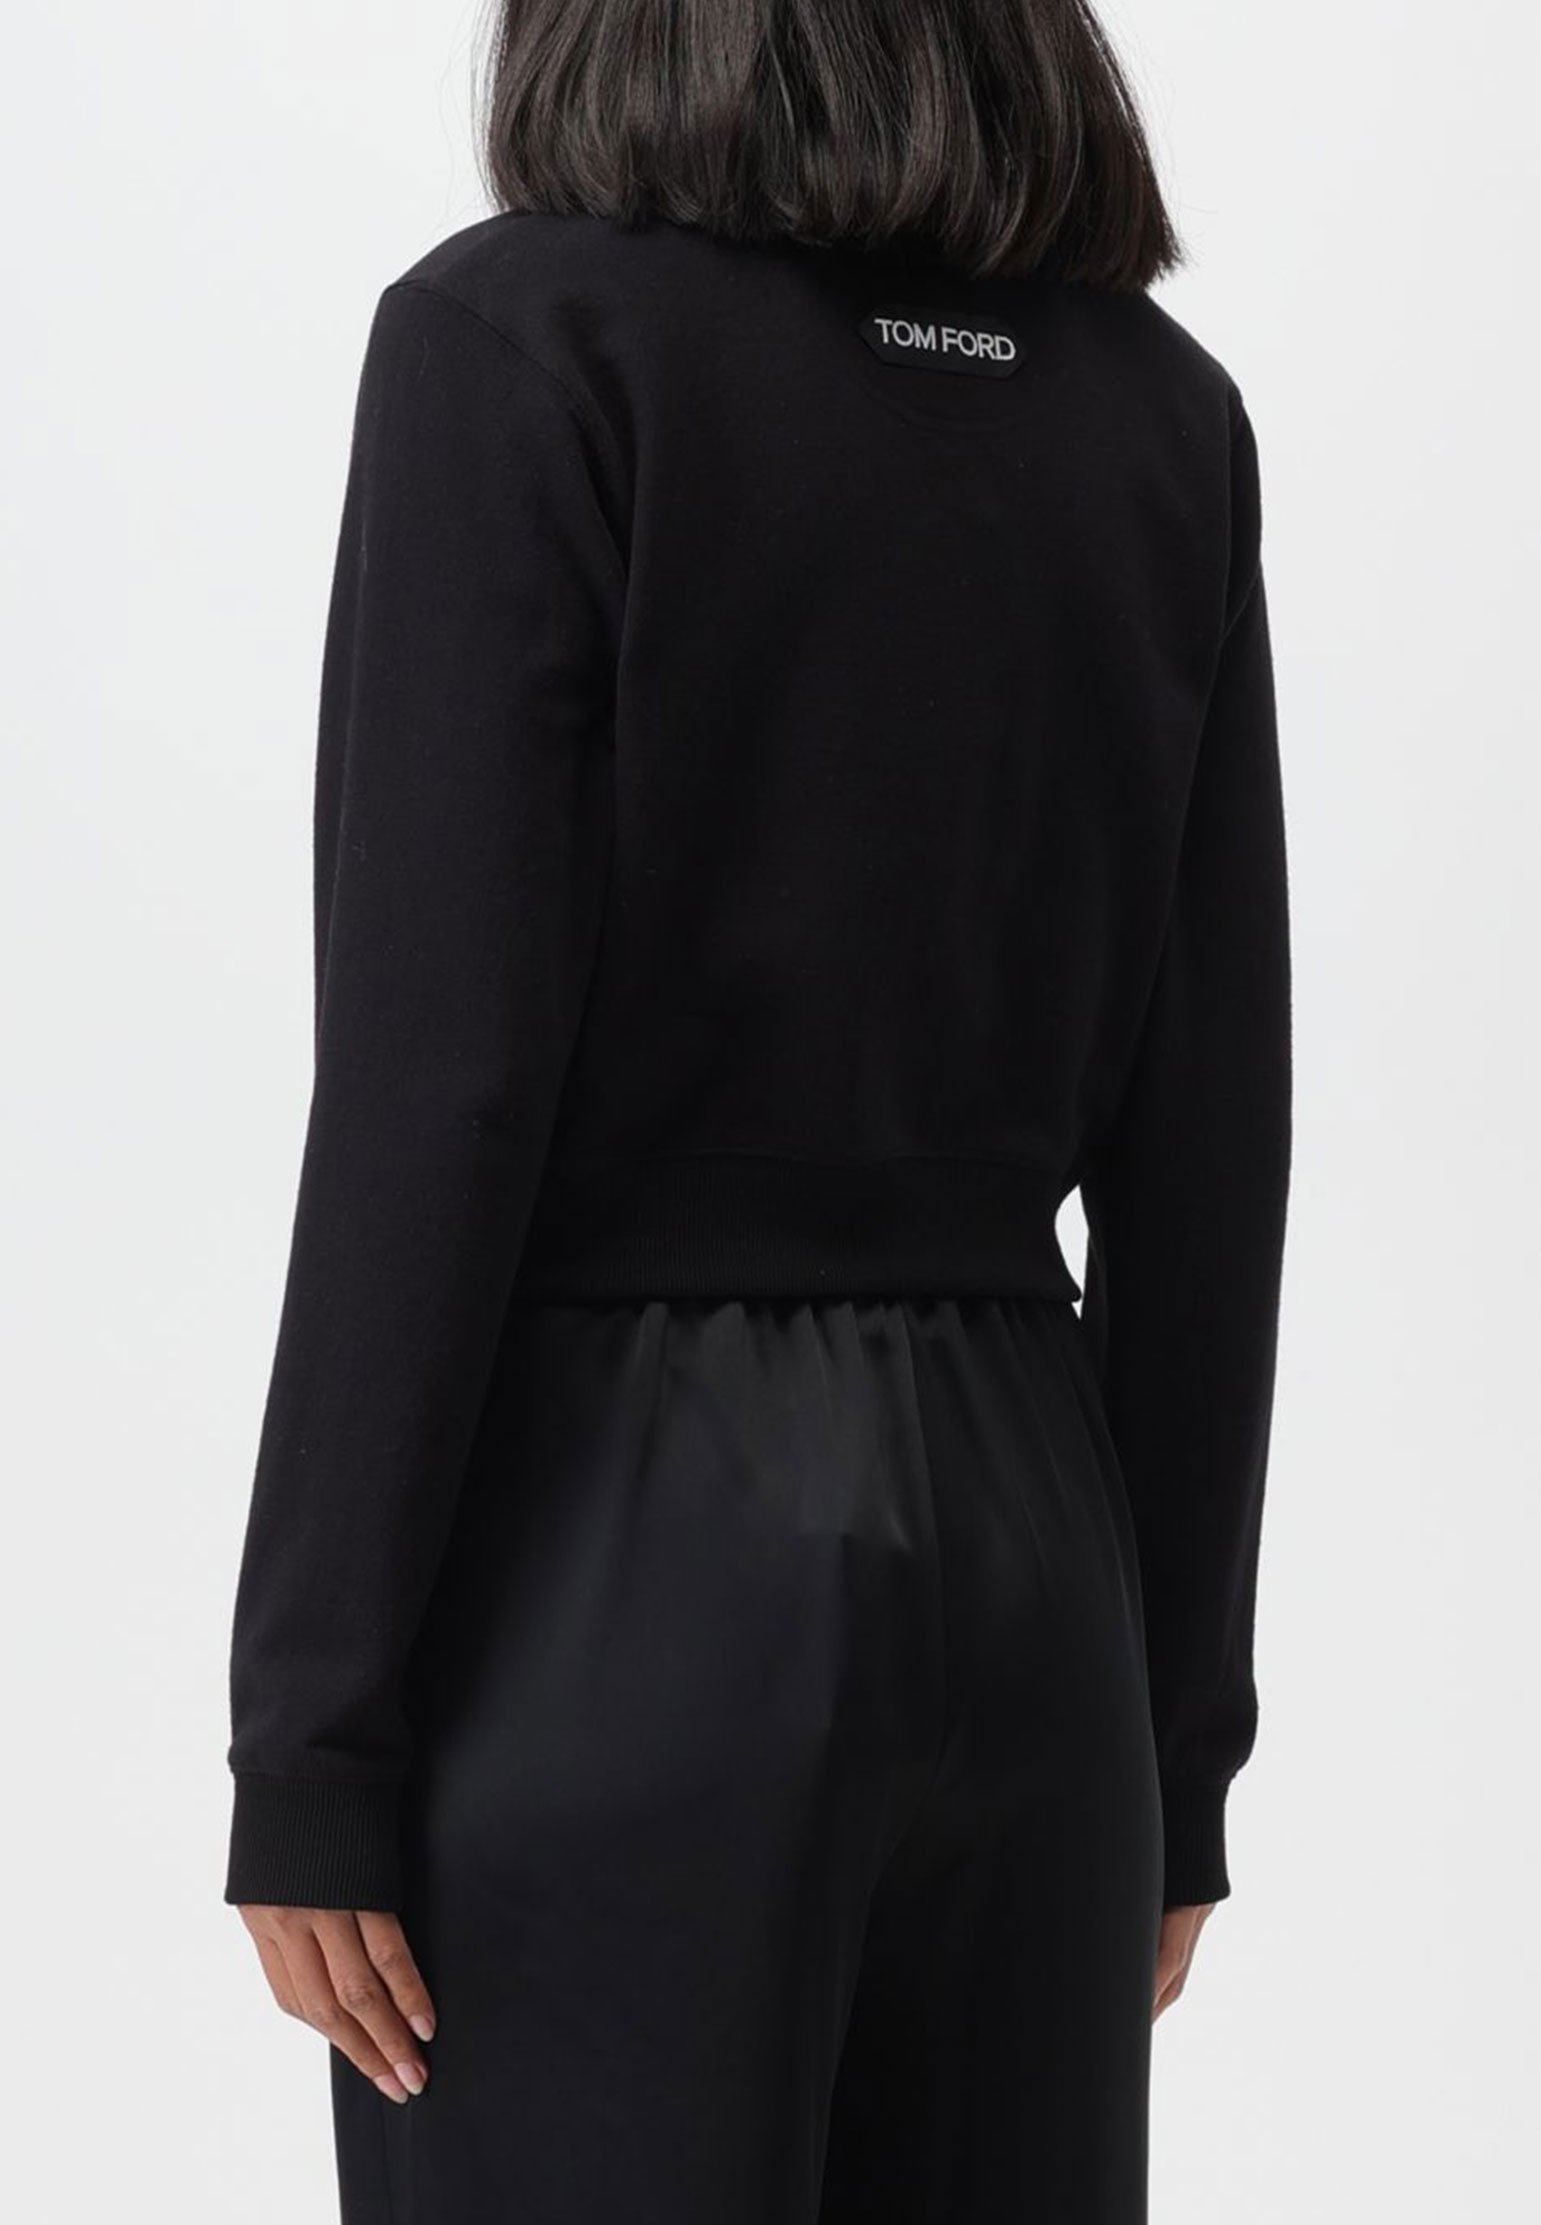 Sweatshirt TOM FORD Color: black (Code: 2955) in online store Allure